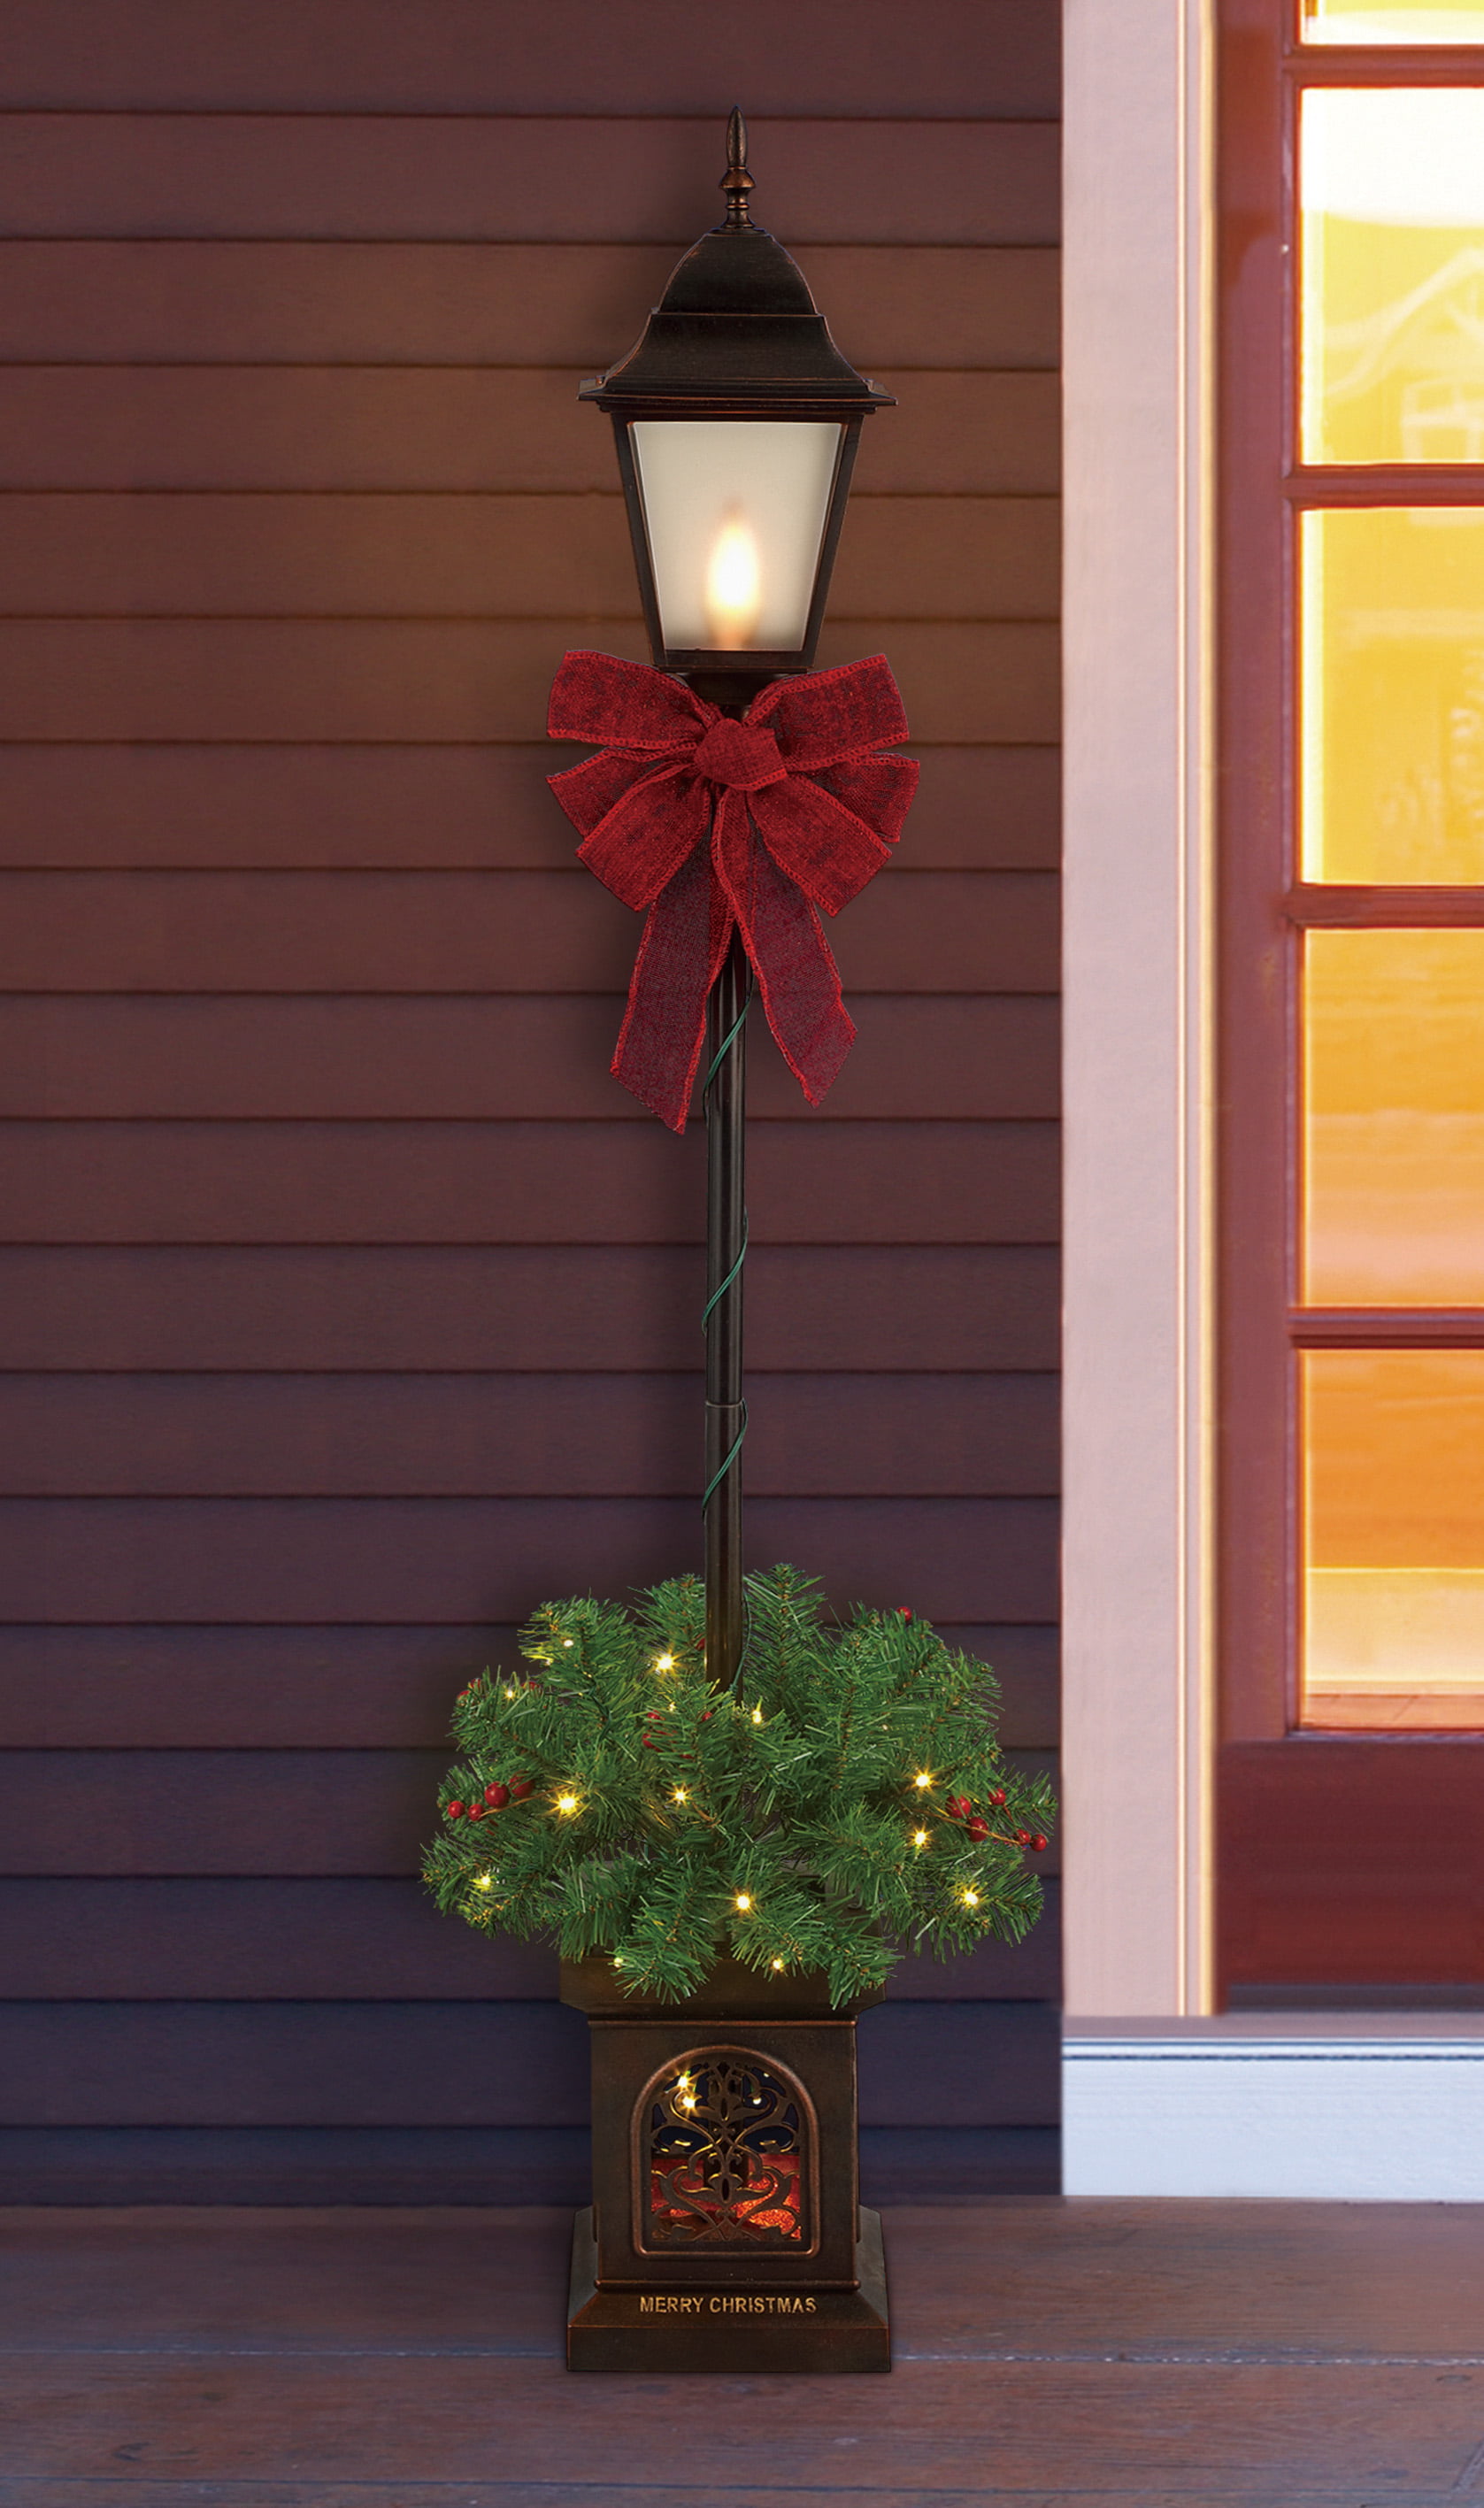 Holiday Time 4-foot Indoor Outdoor Pre-Lit Christmas Lamp Post - Walmart.com